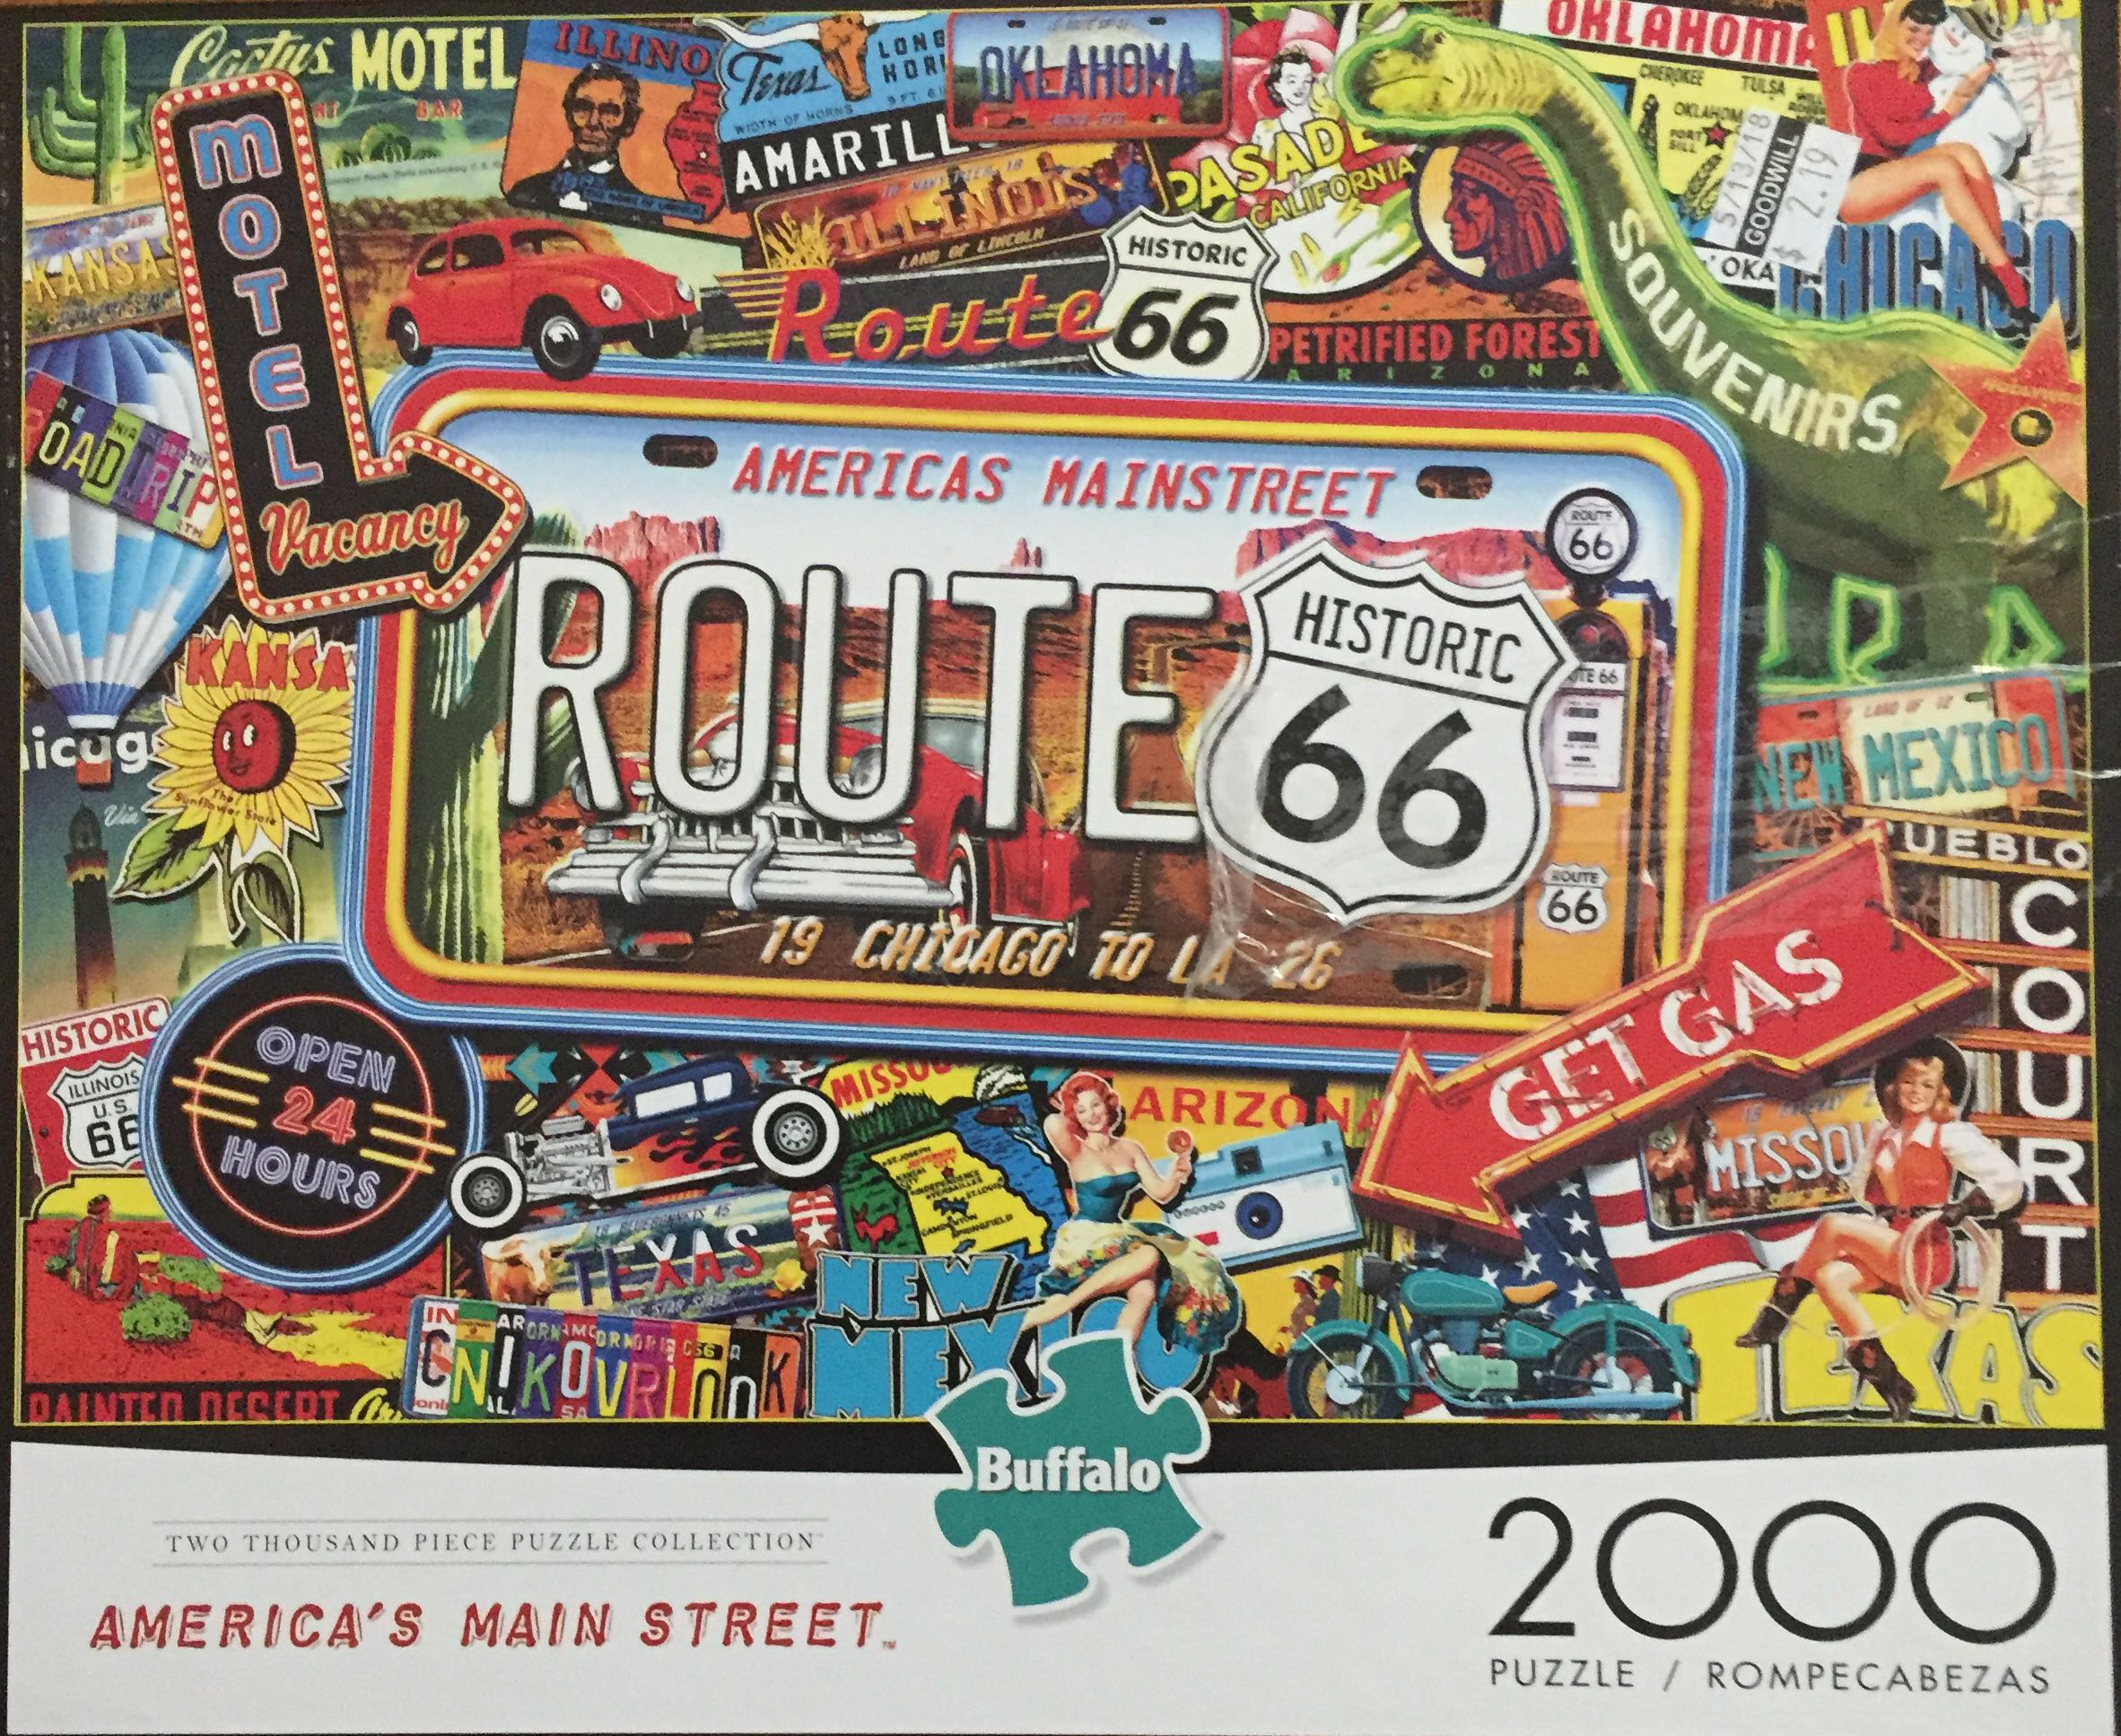 America’s Main Street - Buffalo Games puzzle collectible [Barcode 079346020706] - Main Image 1